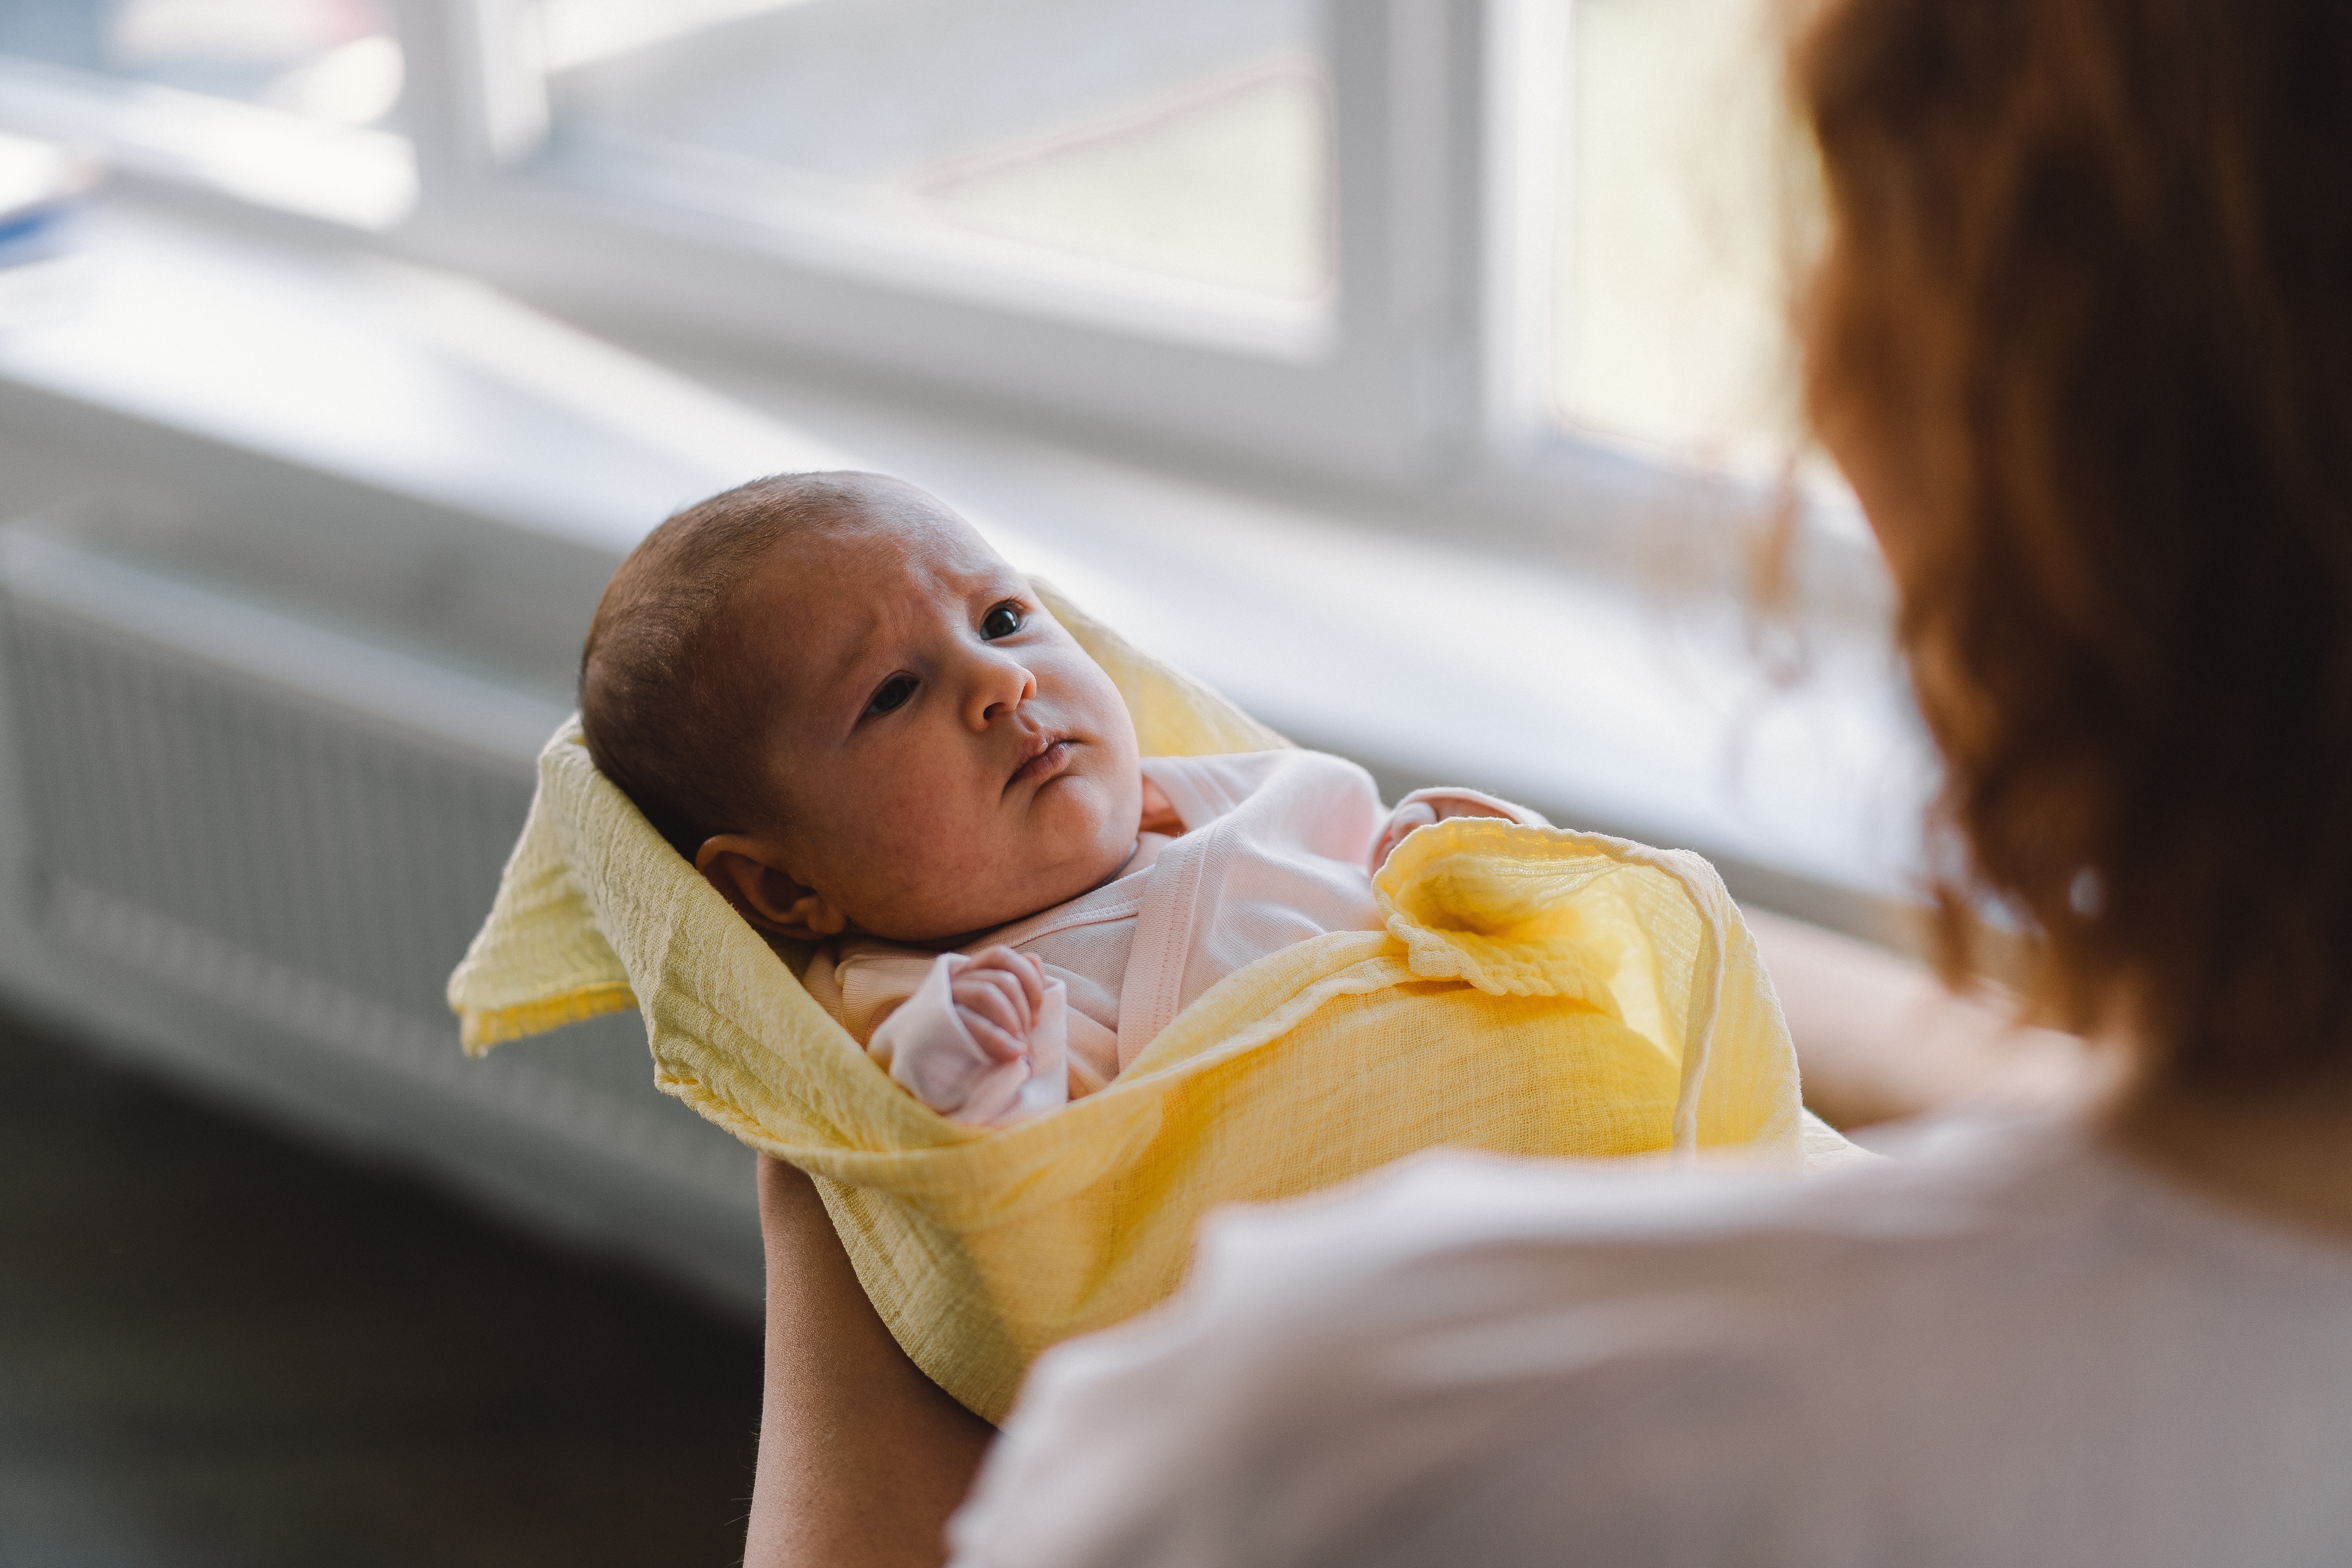 Une femme tenant un bébé. | Source : Shutterstock/Nastyaofly